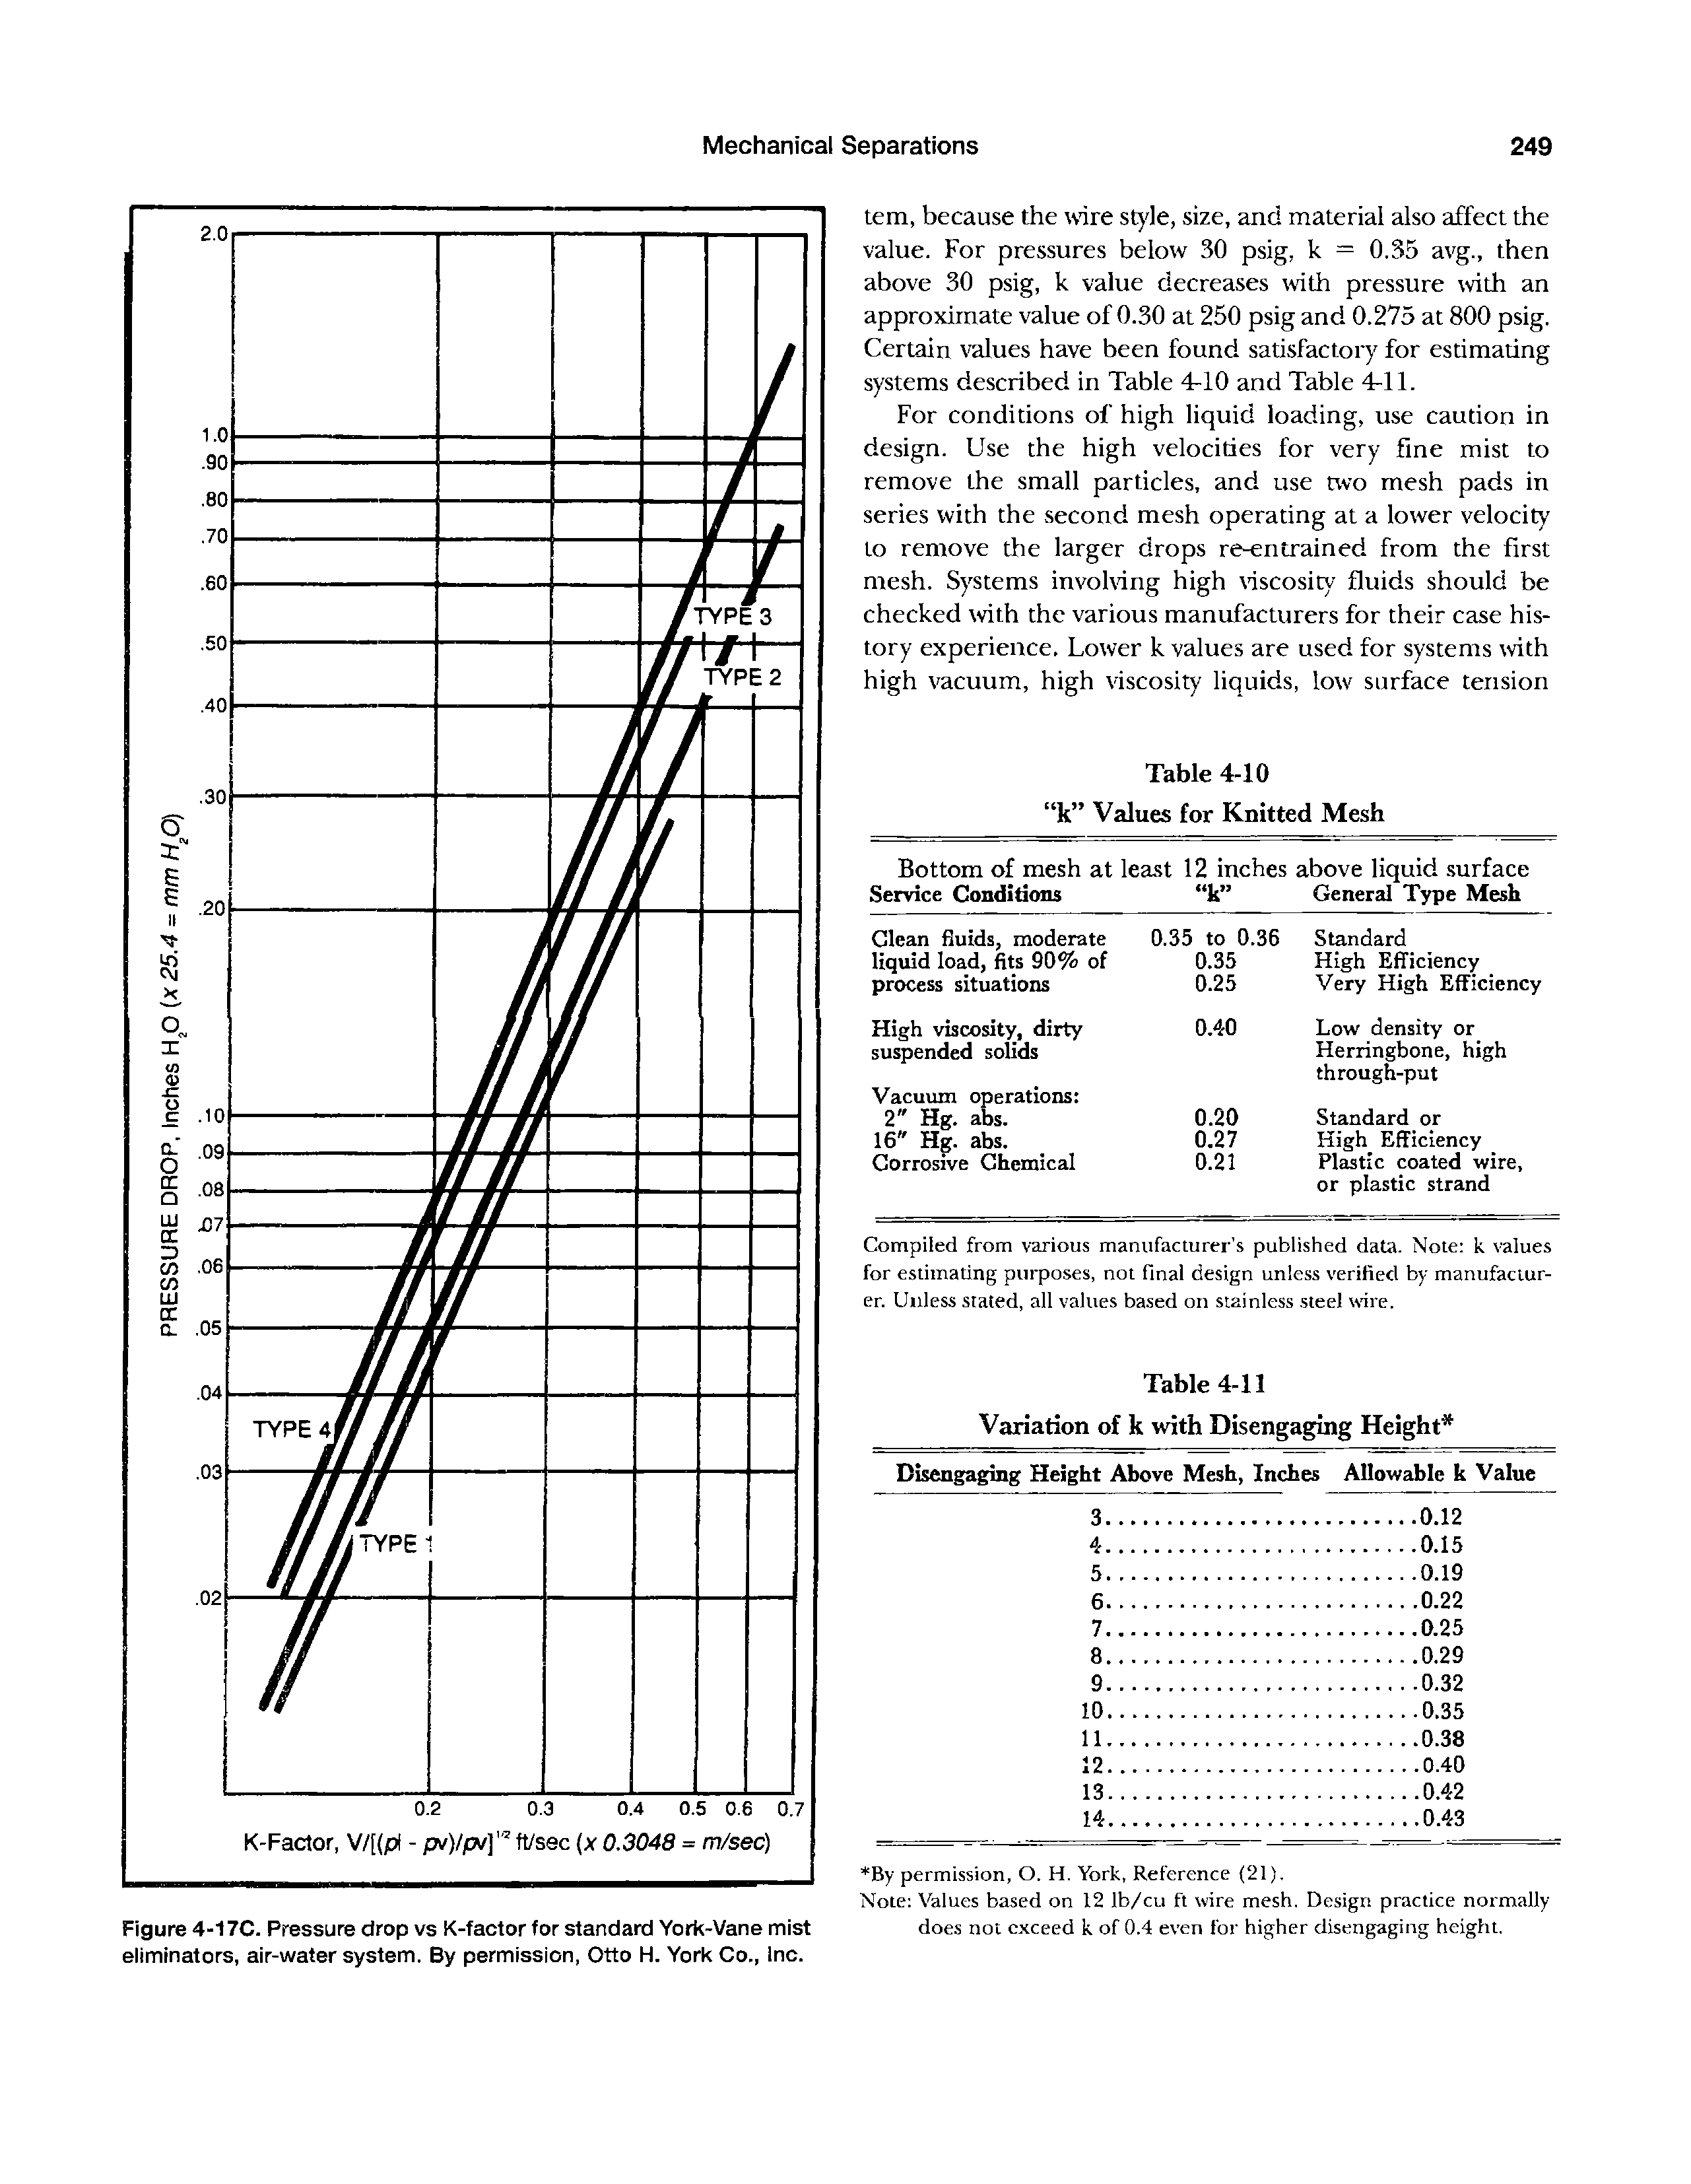 Figure 4-17C. Pressure drop vs K-factor for standard York-Vane mist eliminators, air-water system. By permission, Otto H. York Co., Inc.